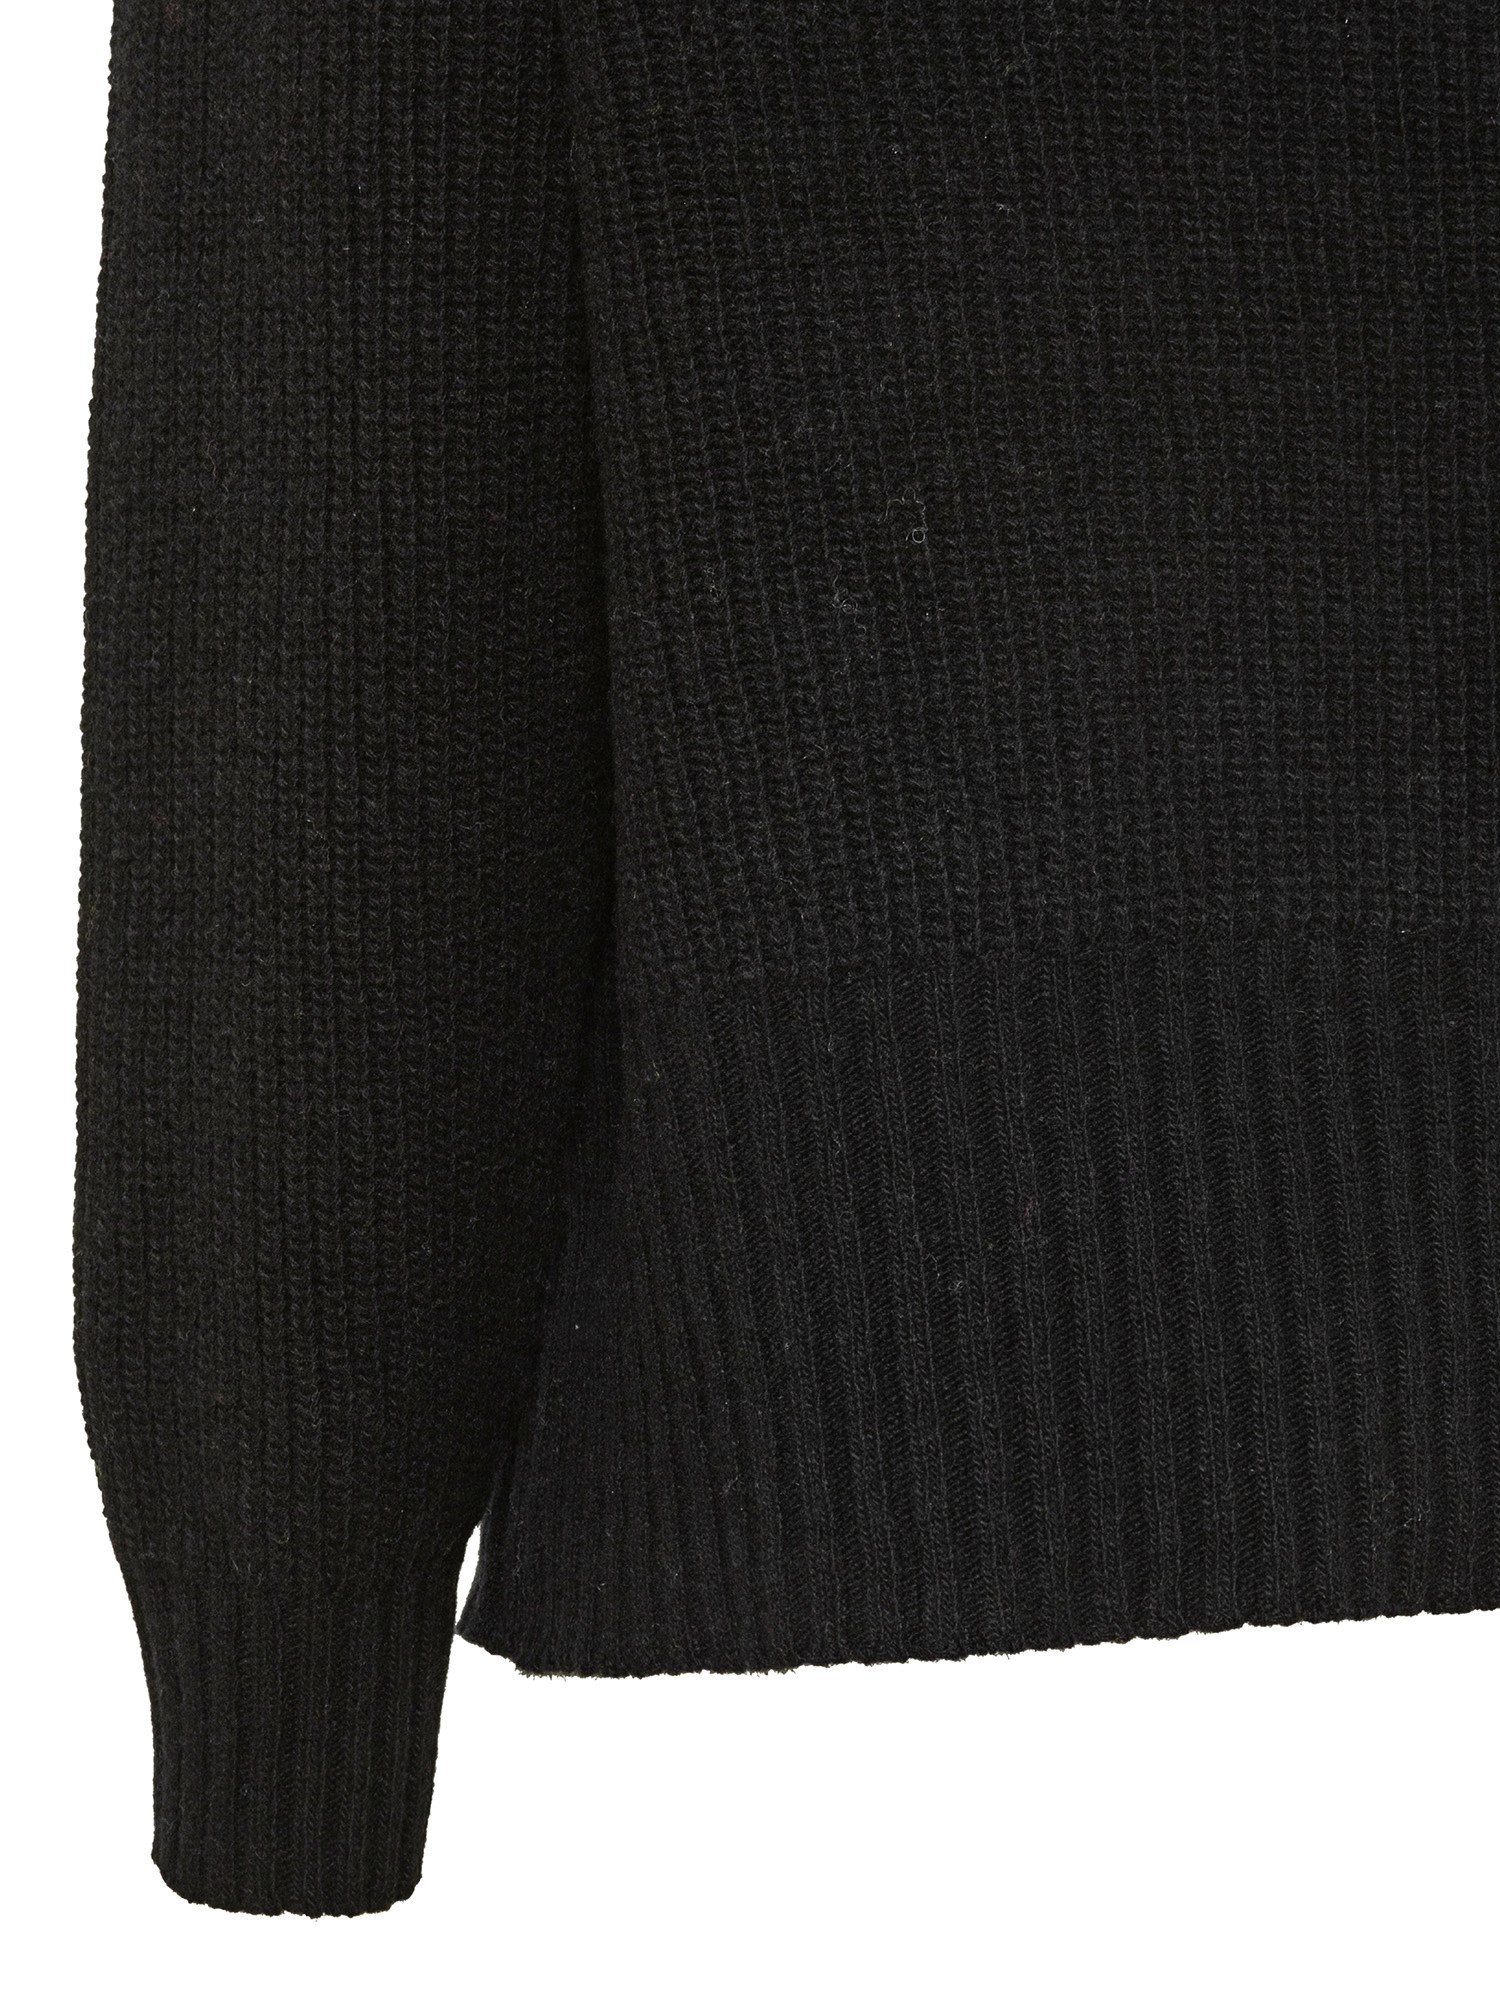 K Collection - Carded wool turtleneck pullover, Black, large image number 2